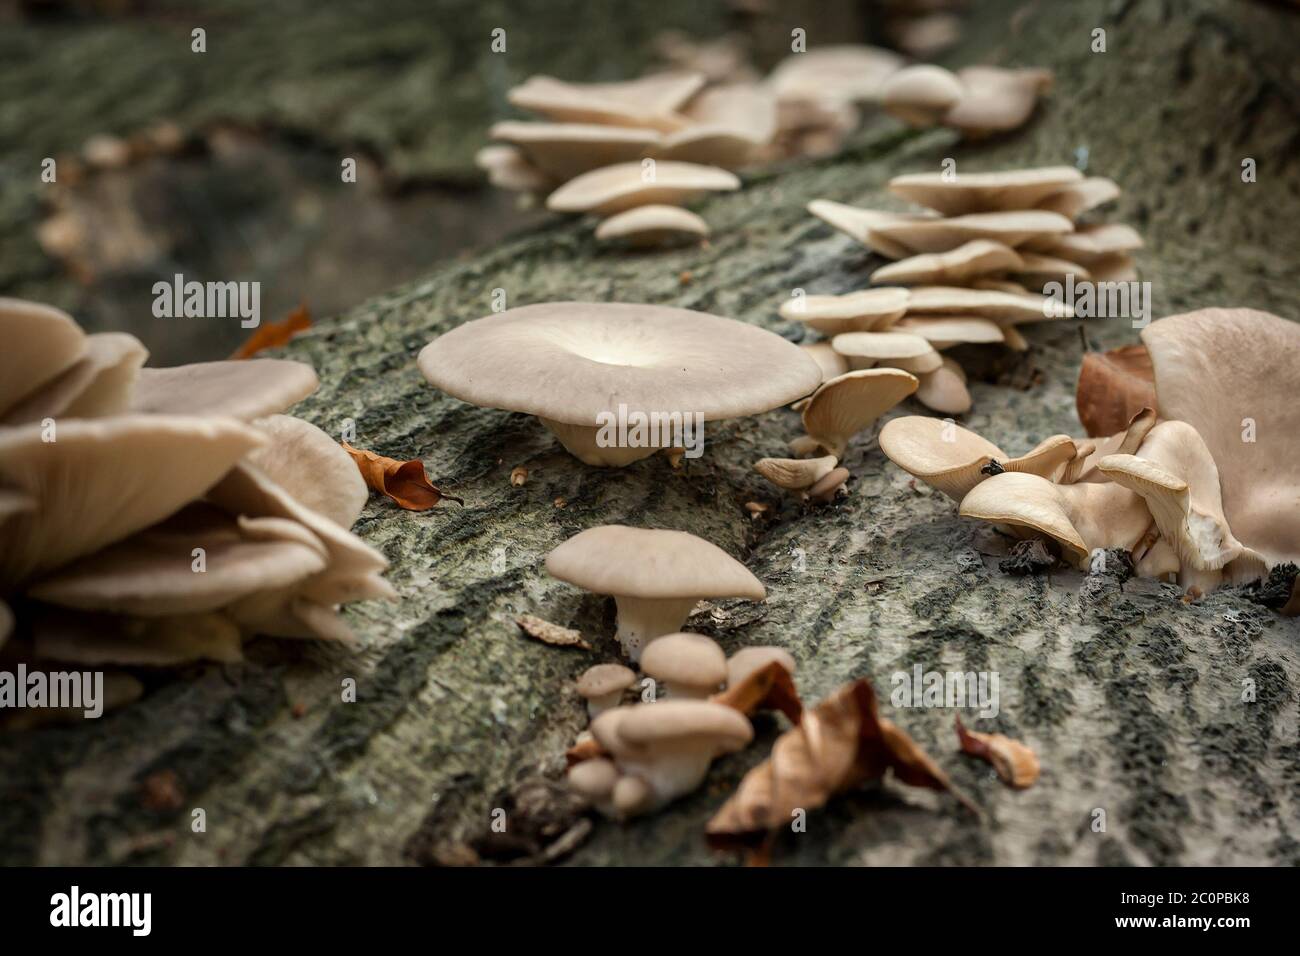 Pleurotus ostreatus or oyster mushrooms growing on a tree trunk Stock Photo